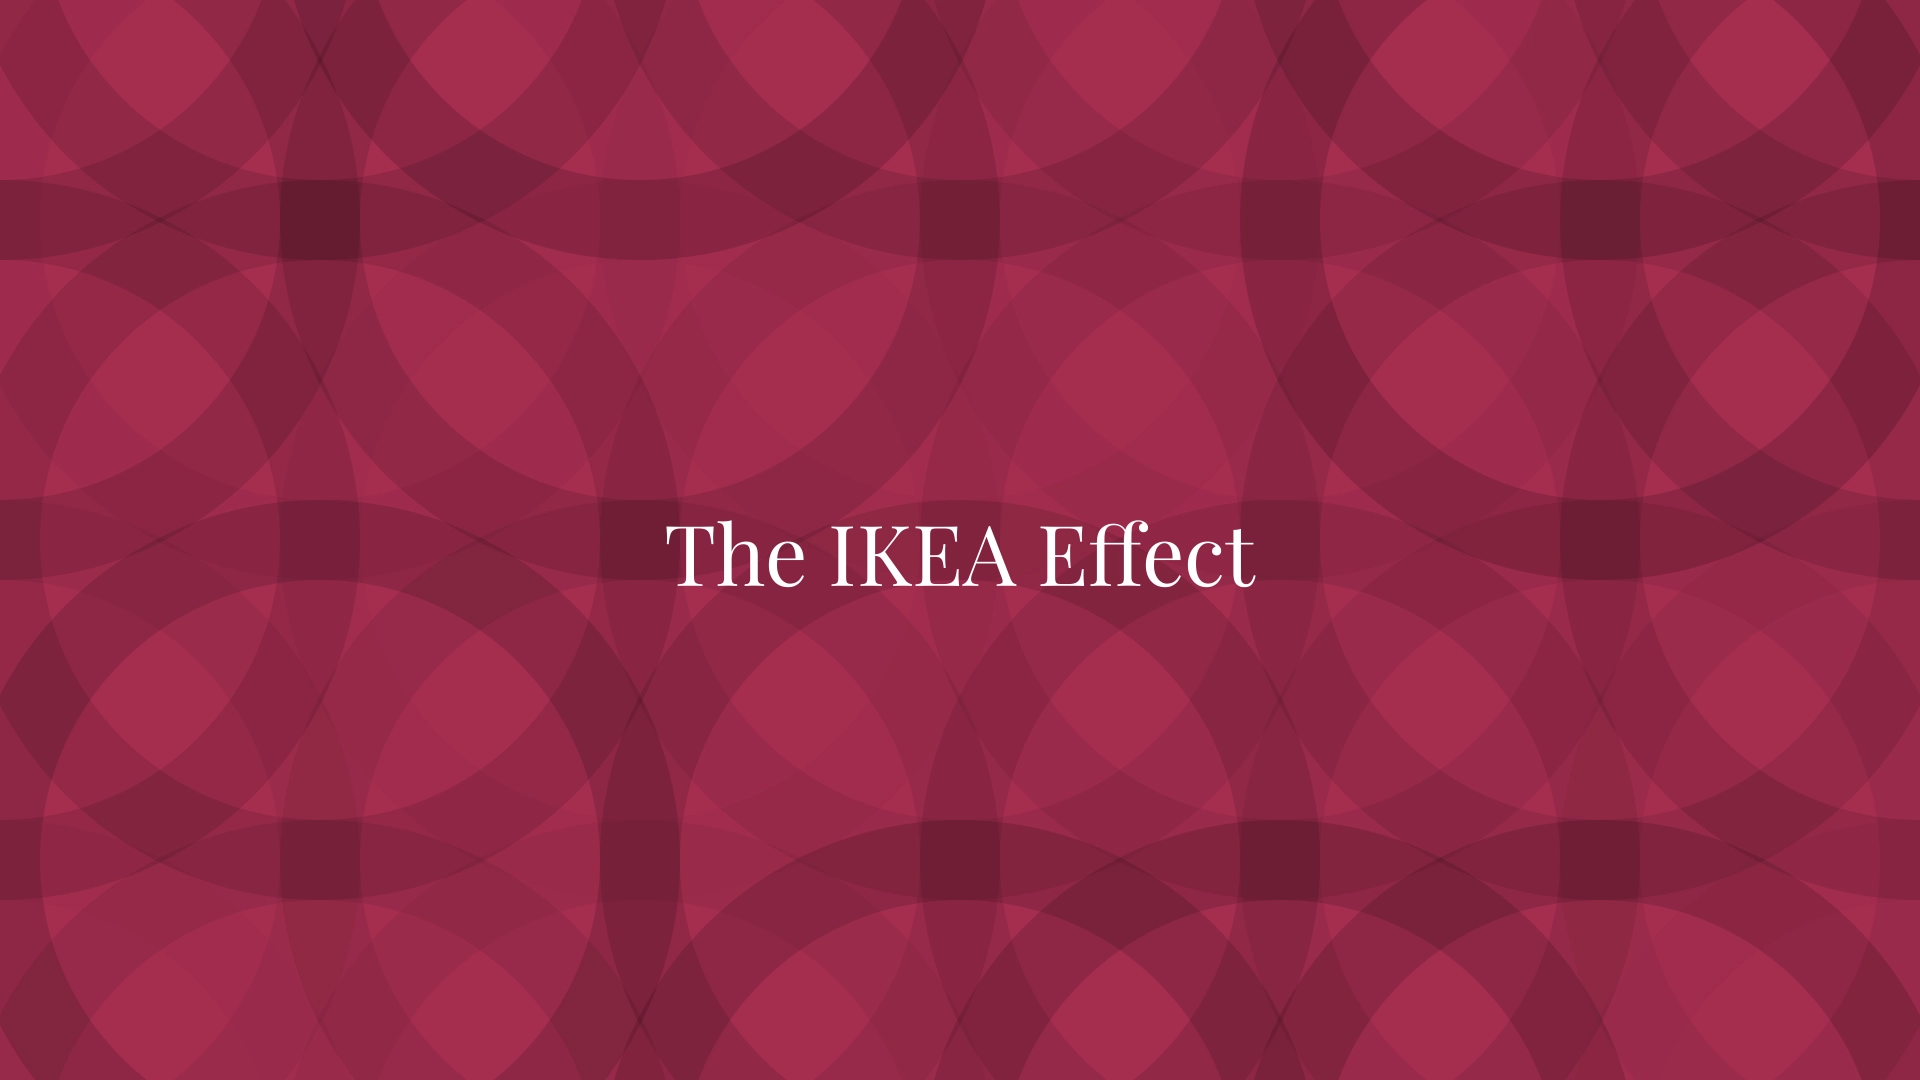 The IKEA Effect